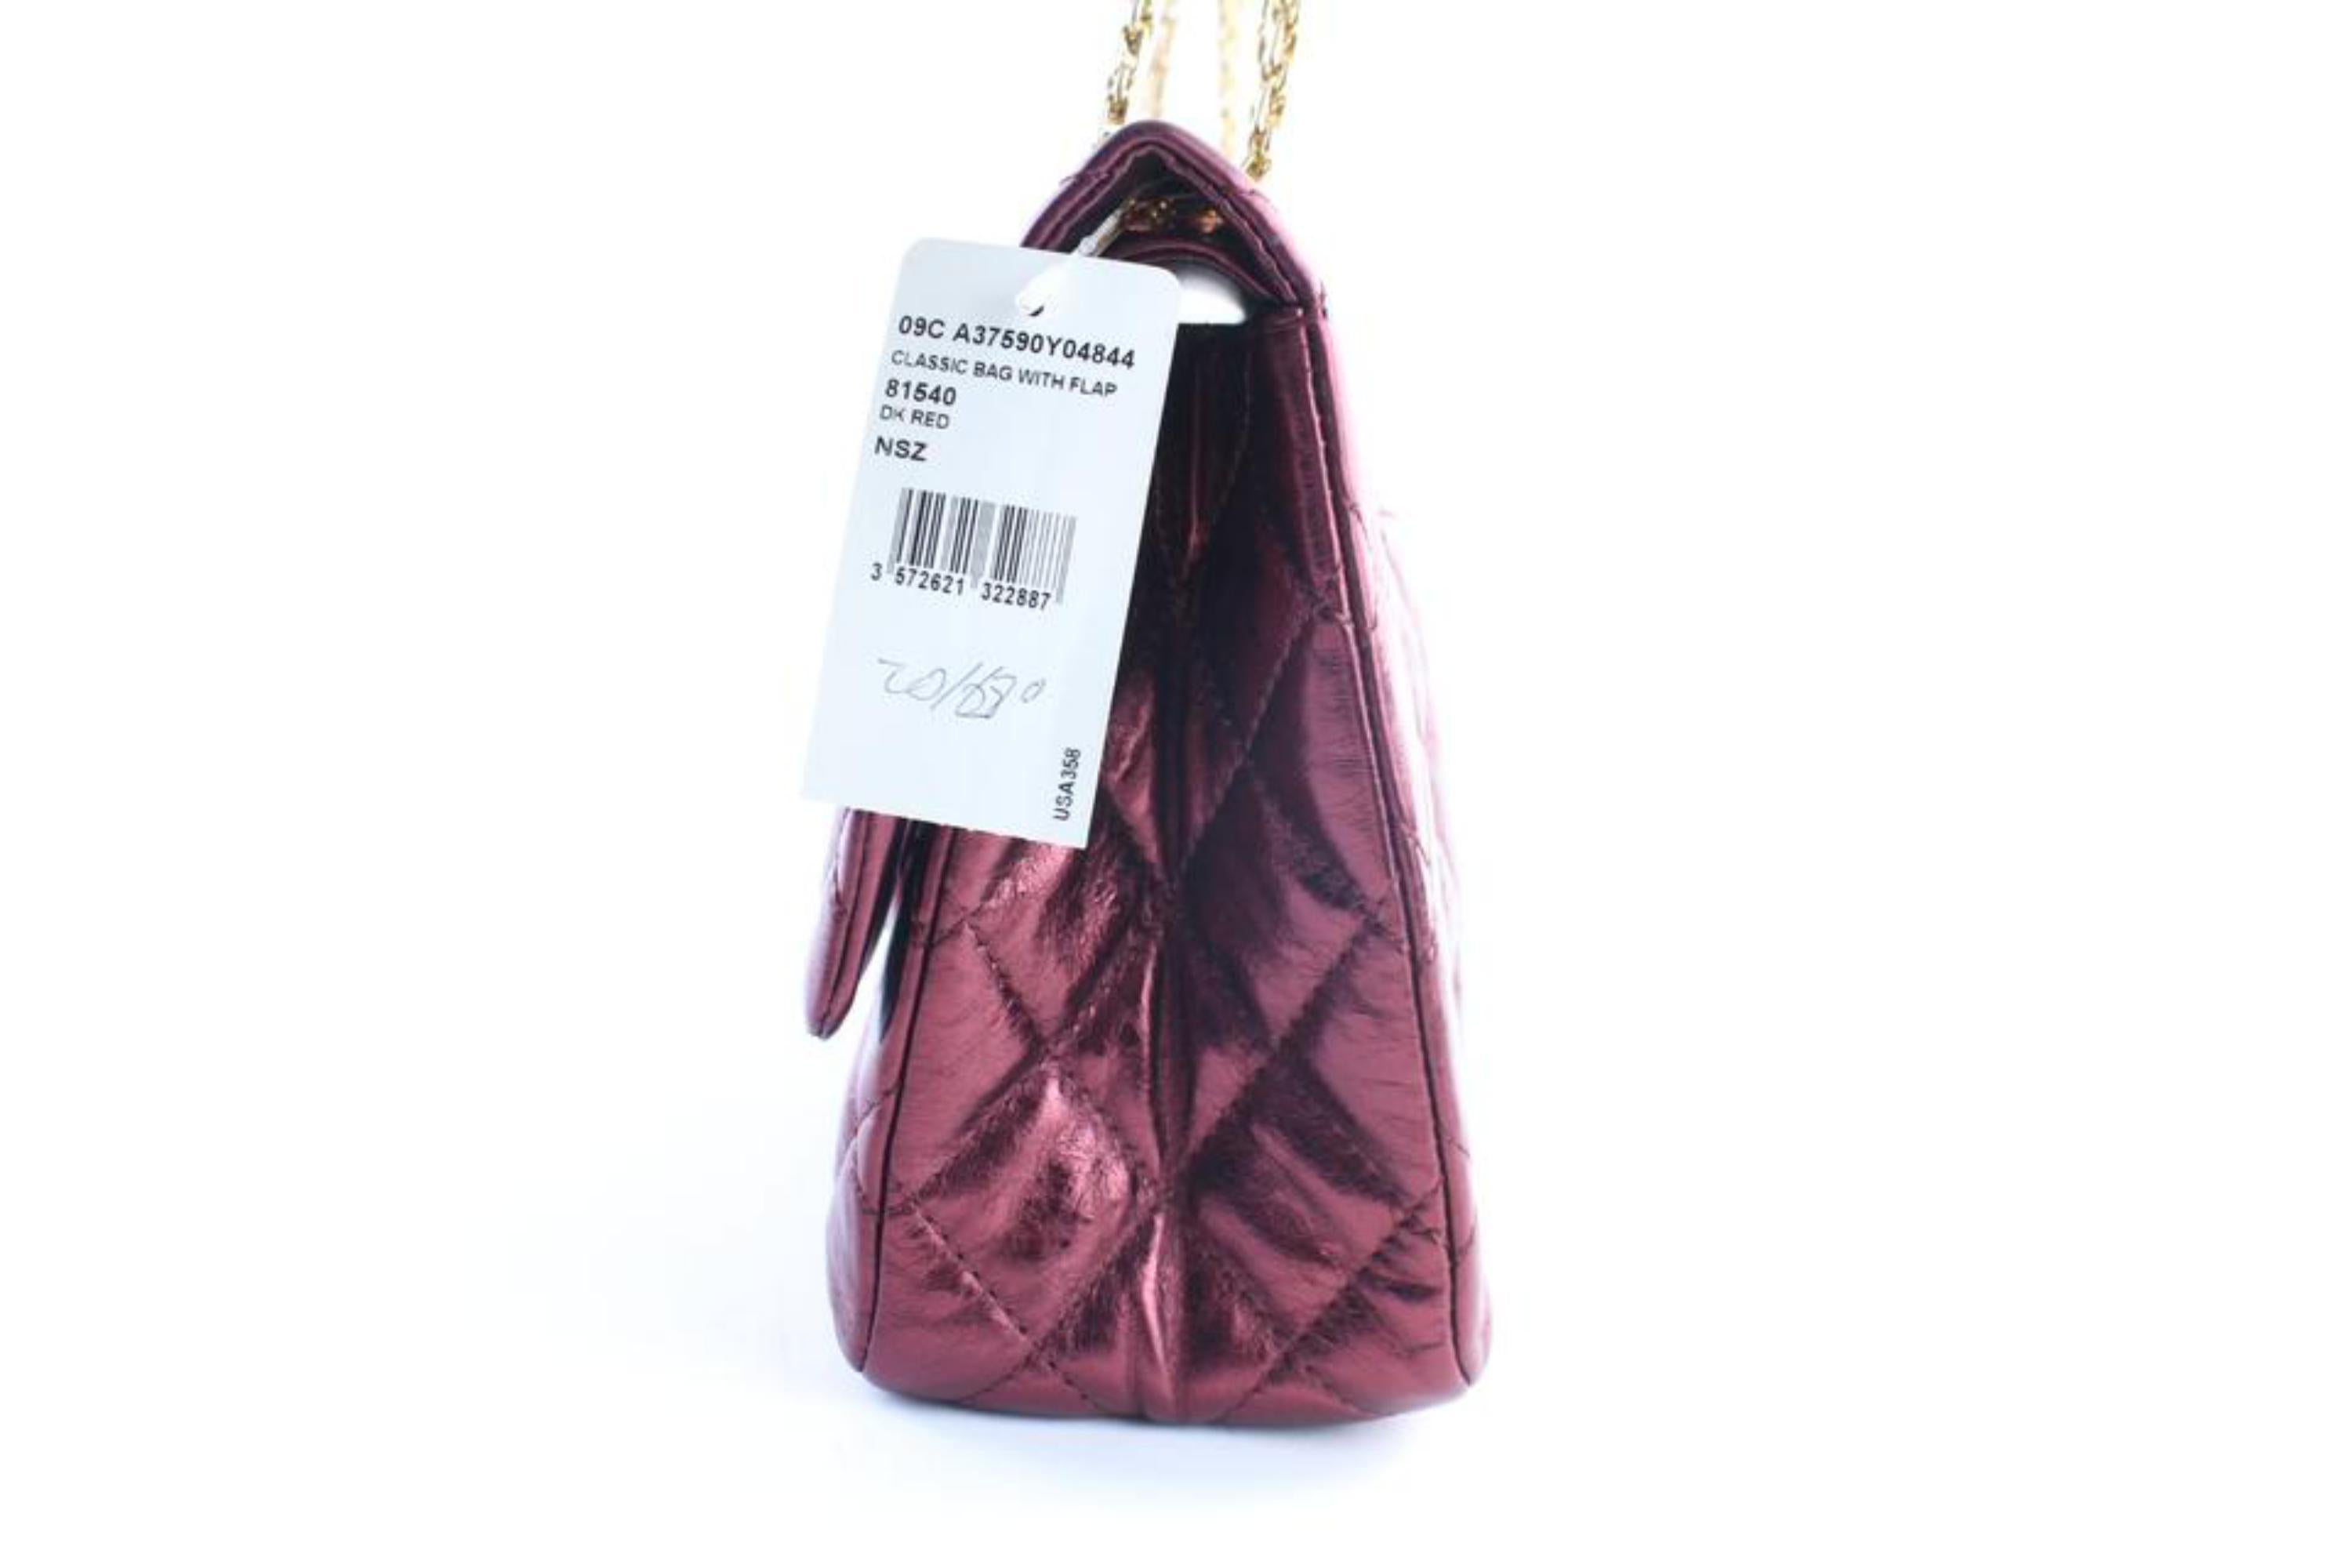 Chanel 2.55 Reissue  227 Flap 11cr0522 Metallic Burgundy Quilted Shoulder Bag For Sale 6